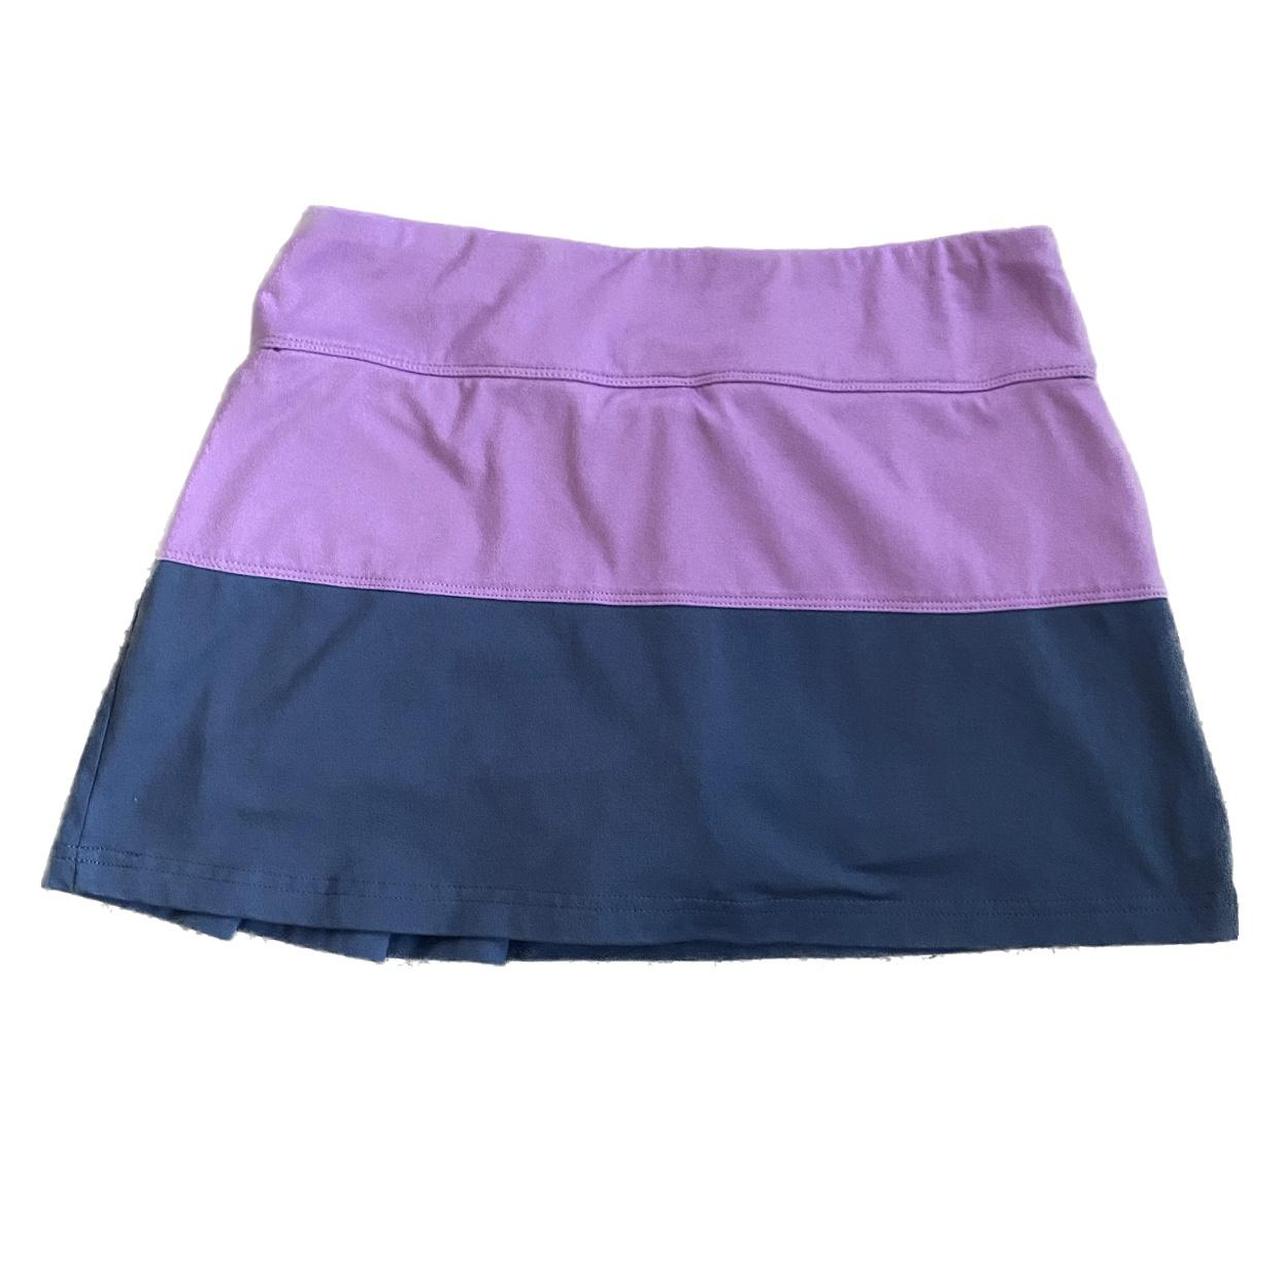 Bollé Women's Purple and Grey Skirt (7)